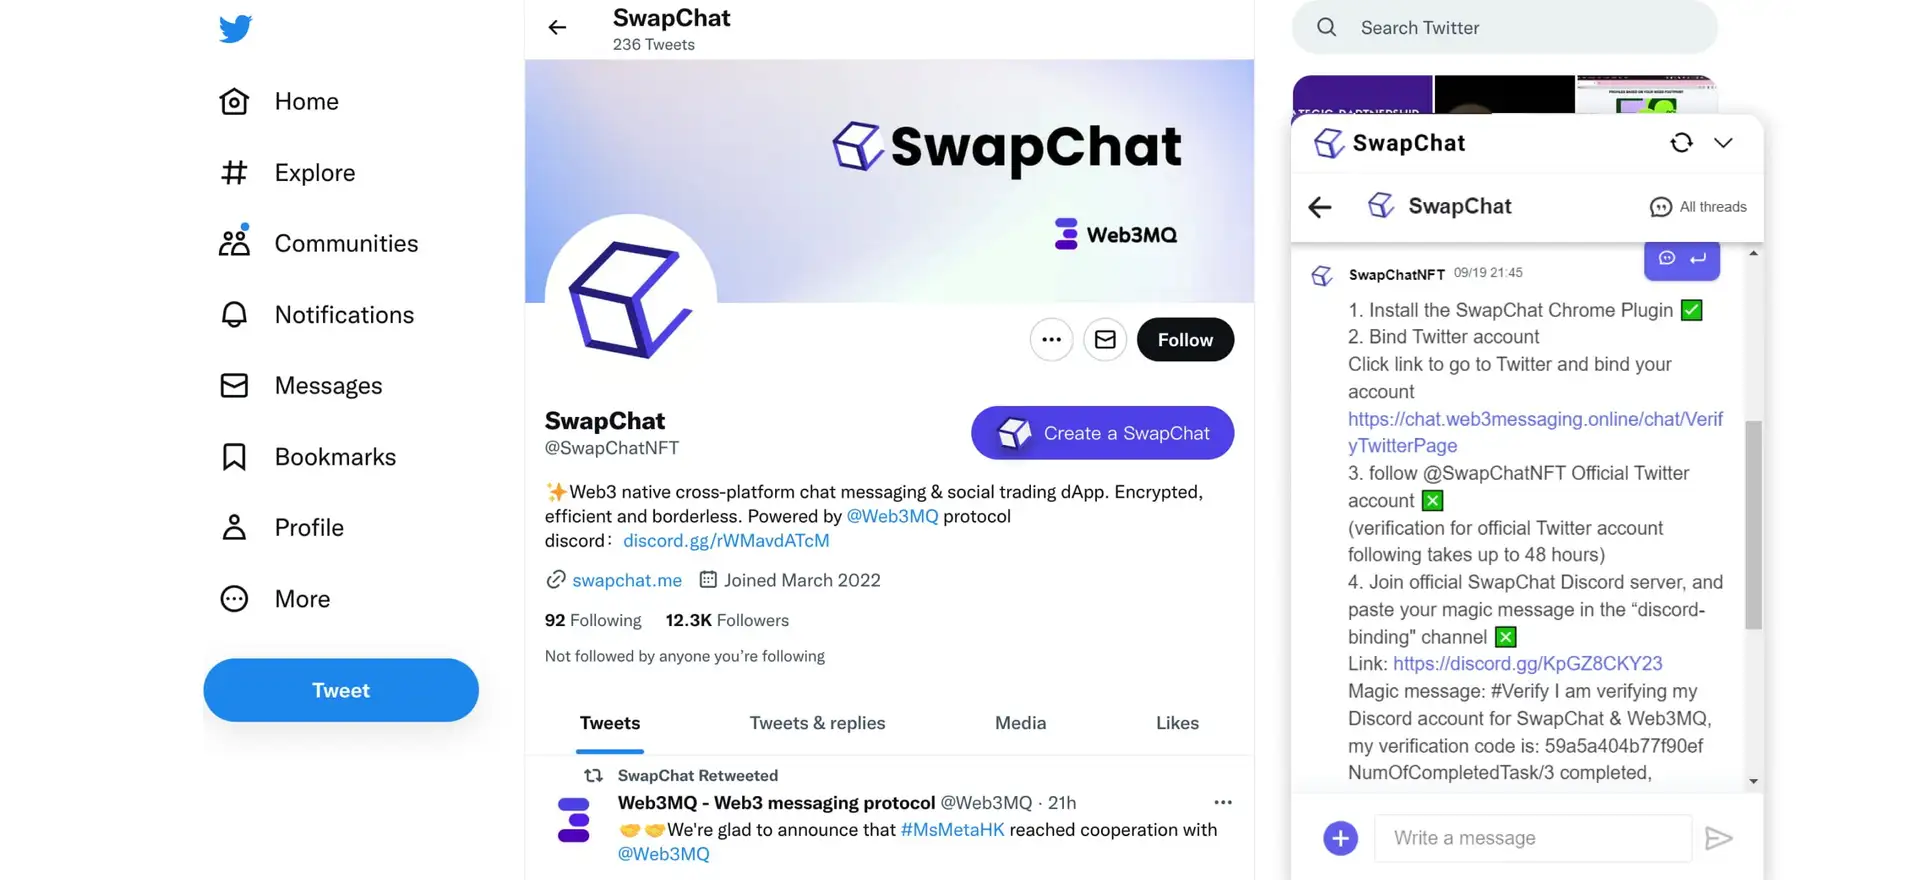 SwapChat Dashboard